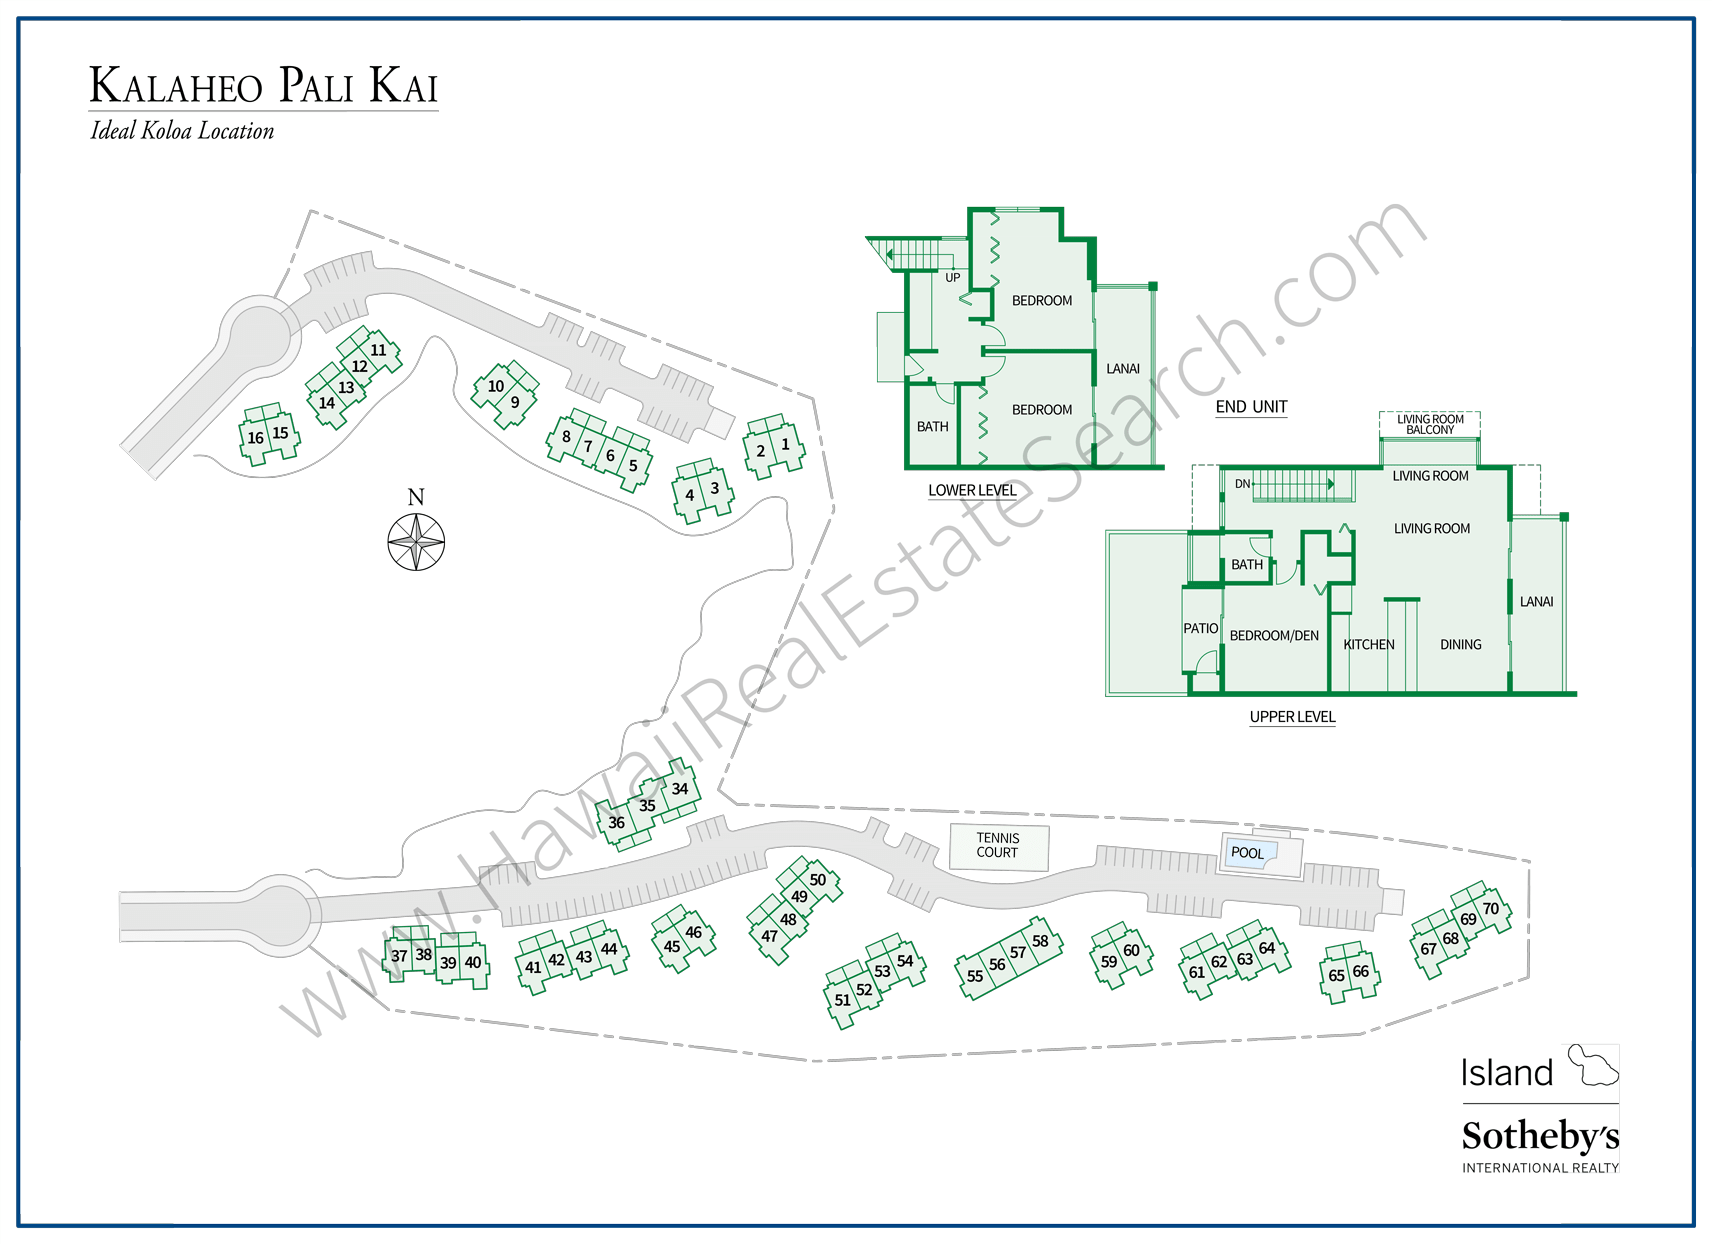 Kalaheo Pali Kai Map and Floor Plan